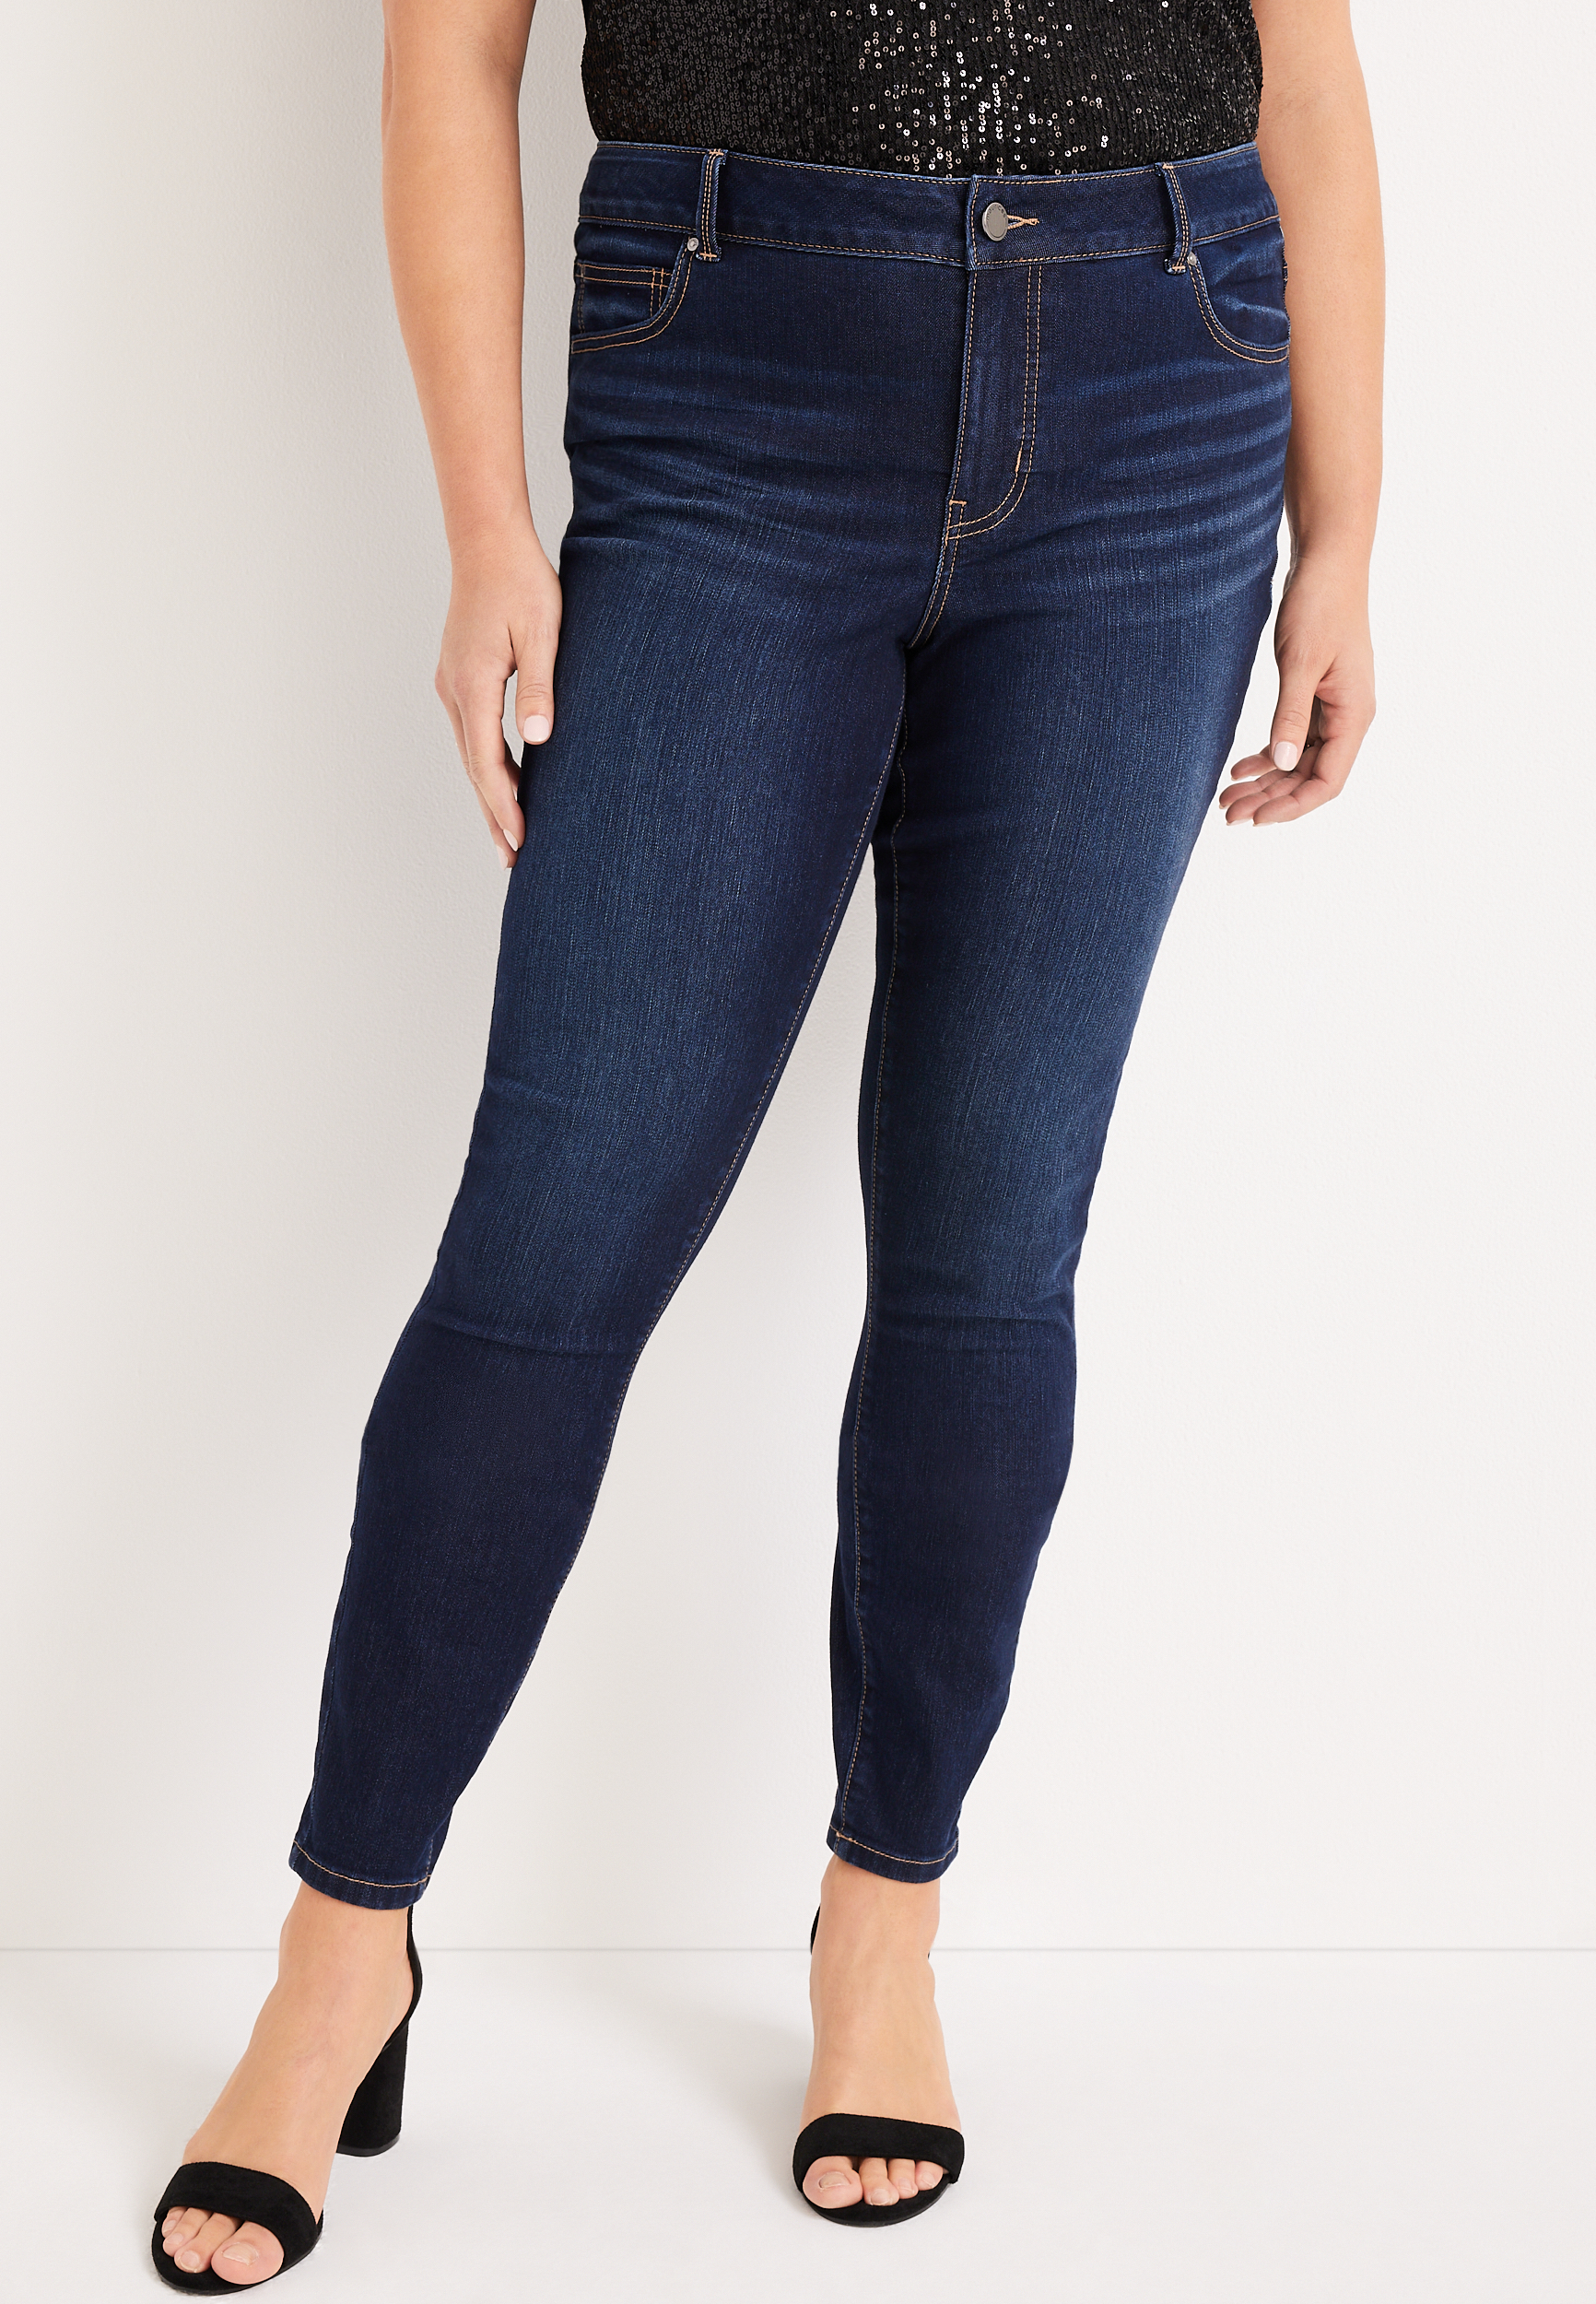 Jean's Posh Pantry Jean Pants for Women plus Size Womens Jeans Casual Mid  Waist Pants Trousers Pockets Classic Denim Jeans Slim Woman